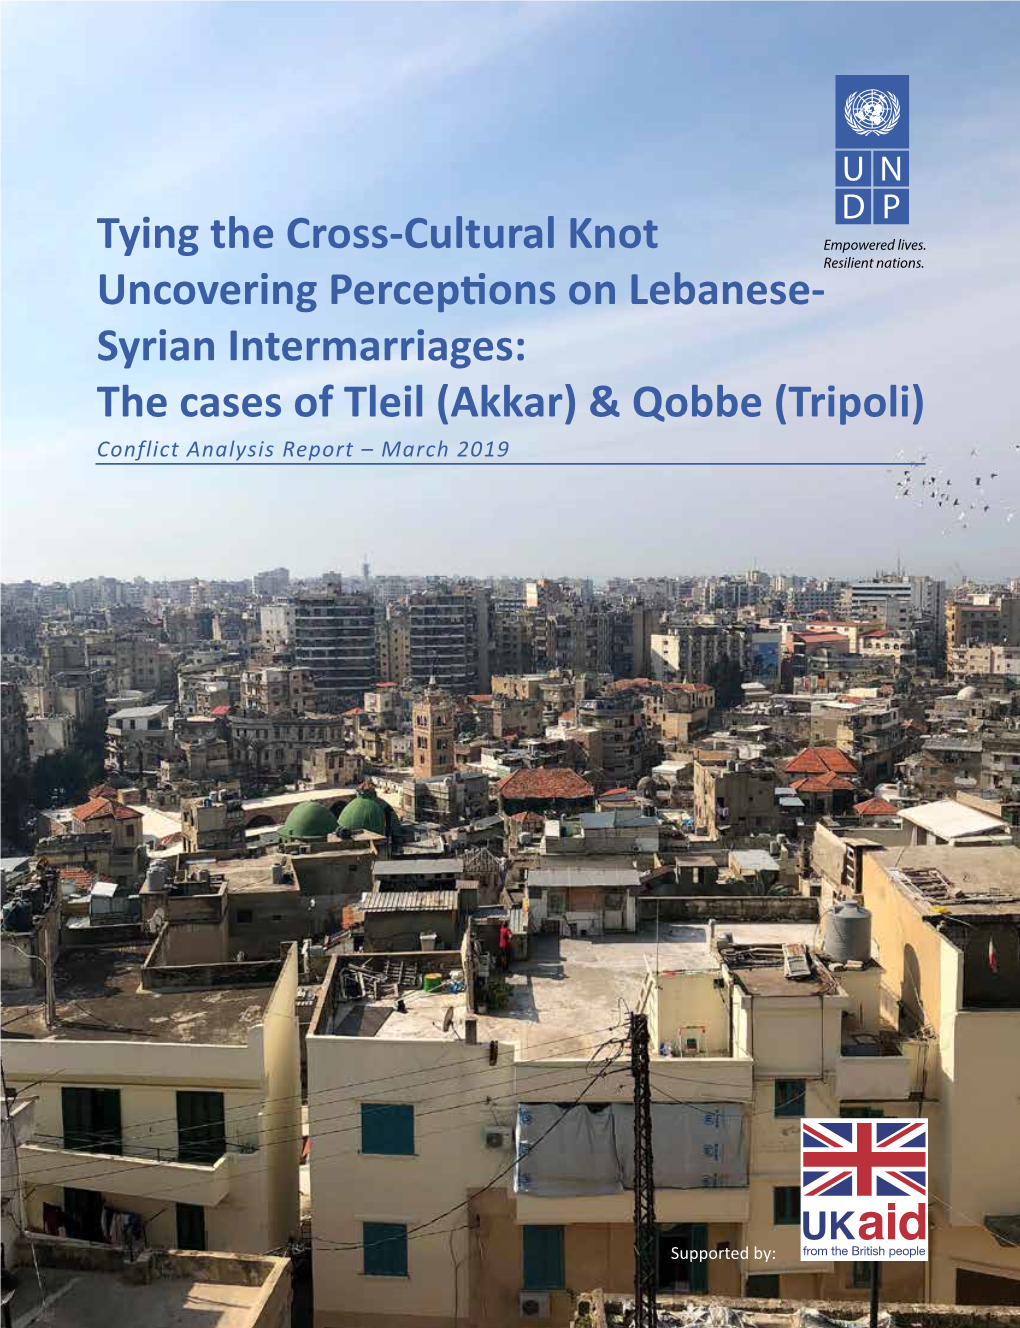 Akkar) & Qobbe (Tripoli) Conflict Analysis Report – March 2019